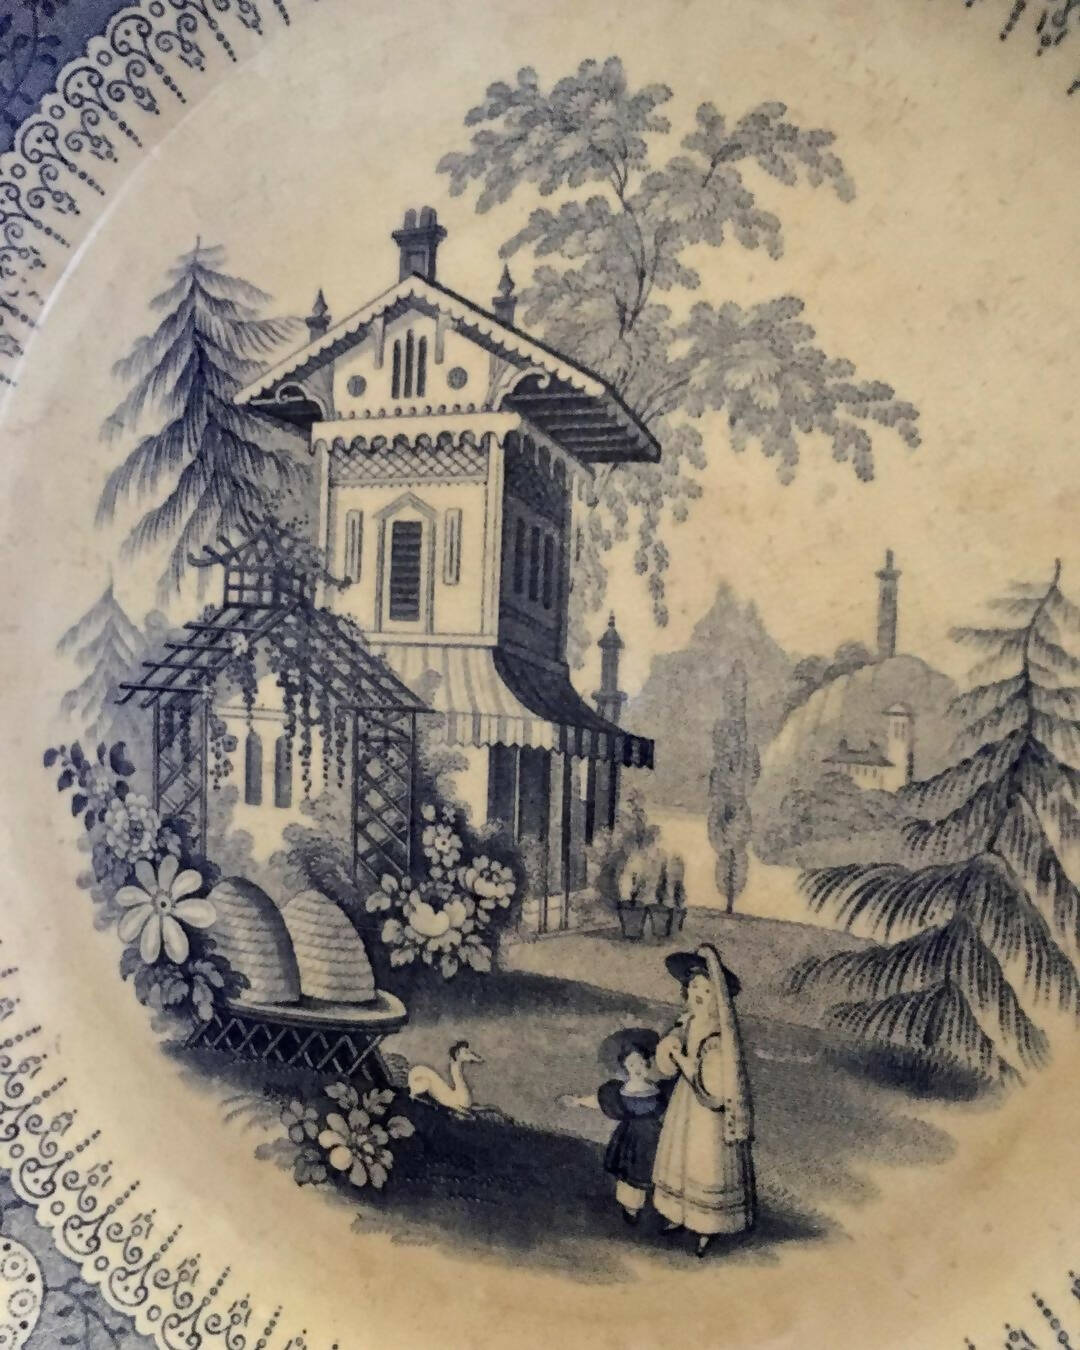 19th century china plates